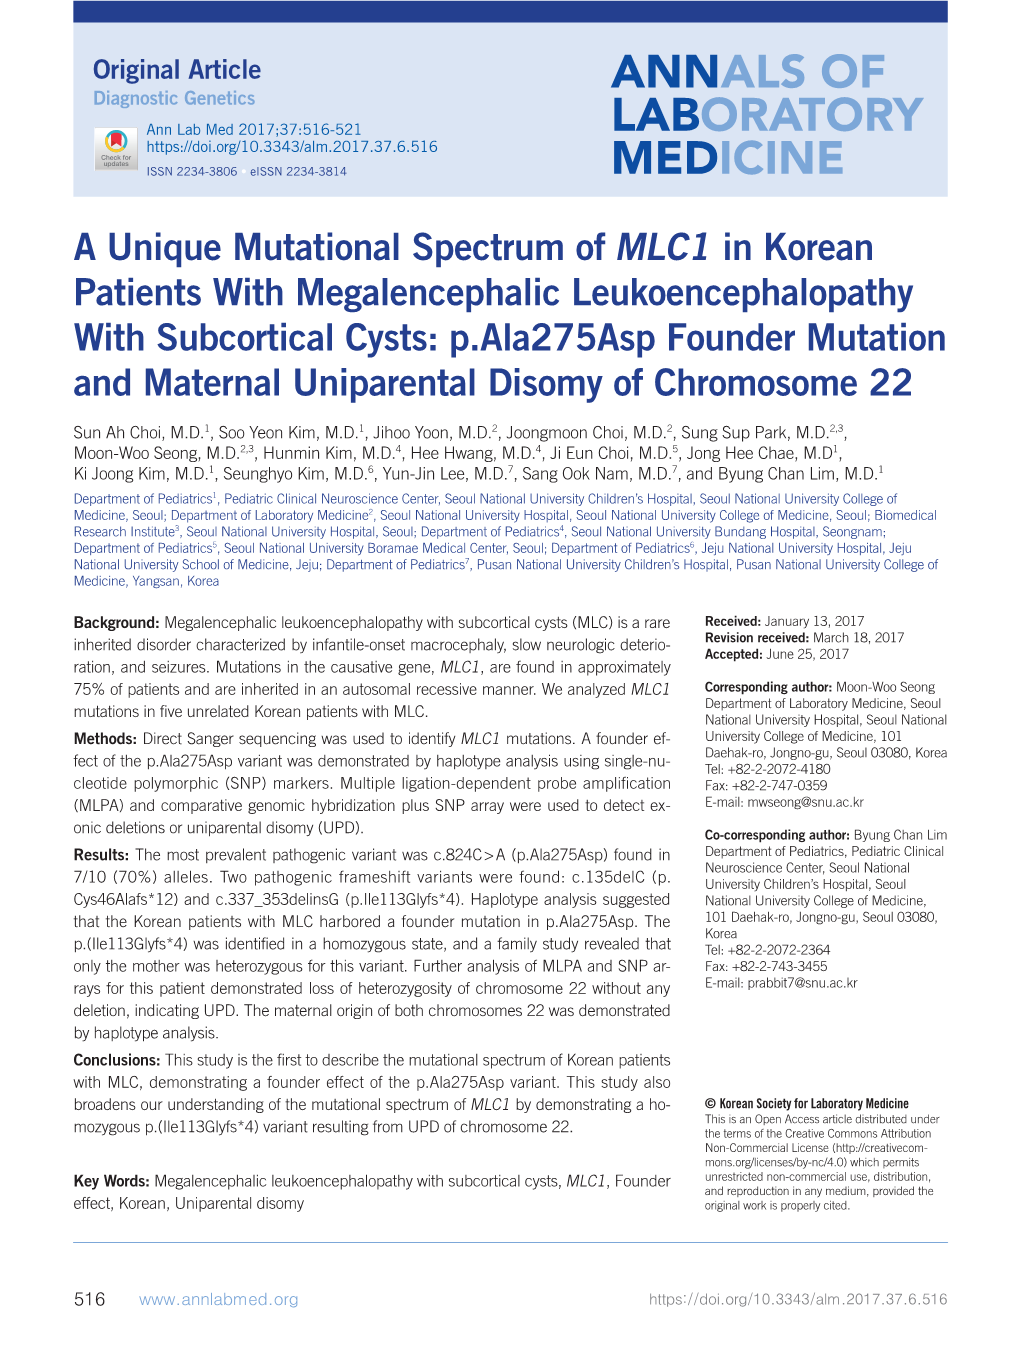 A Unique Mutational Spectrum of MLC1 in Korean Patients With